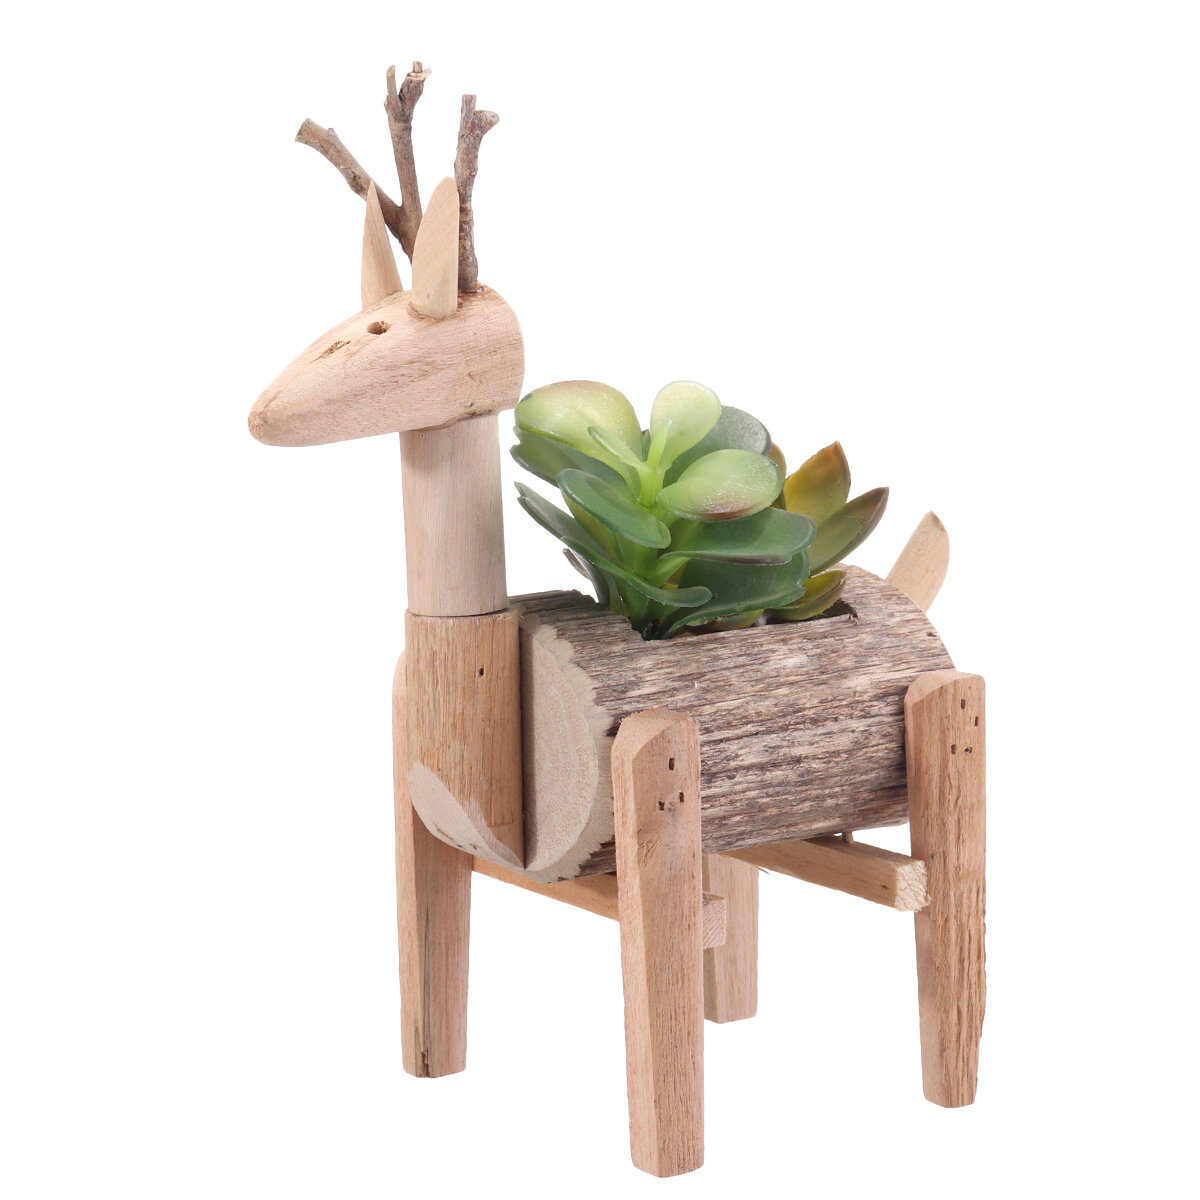 

Mini Wooden Potted Plant Deer Shaped Home Furnishing Flower Pots Living Room Office Desktop Plant Ornament